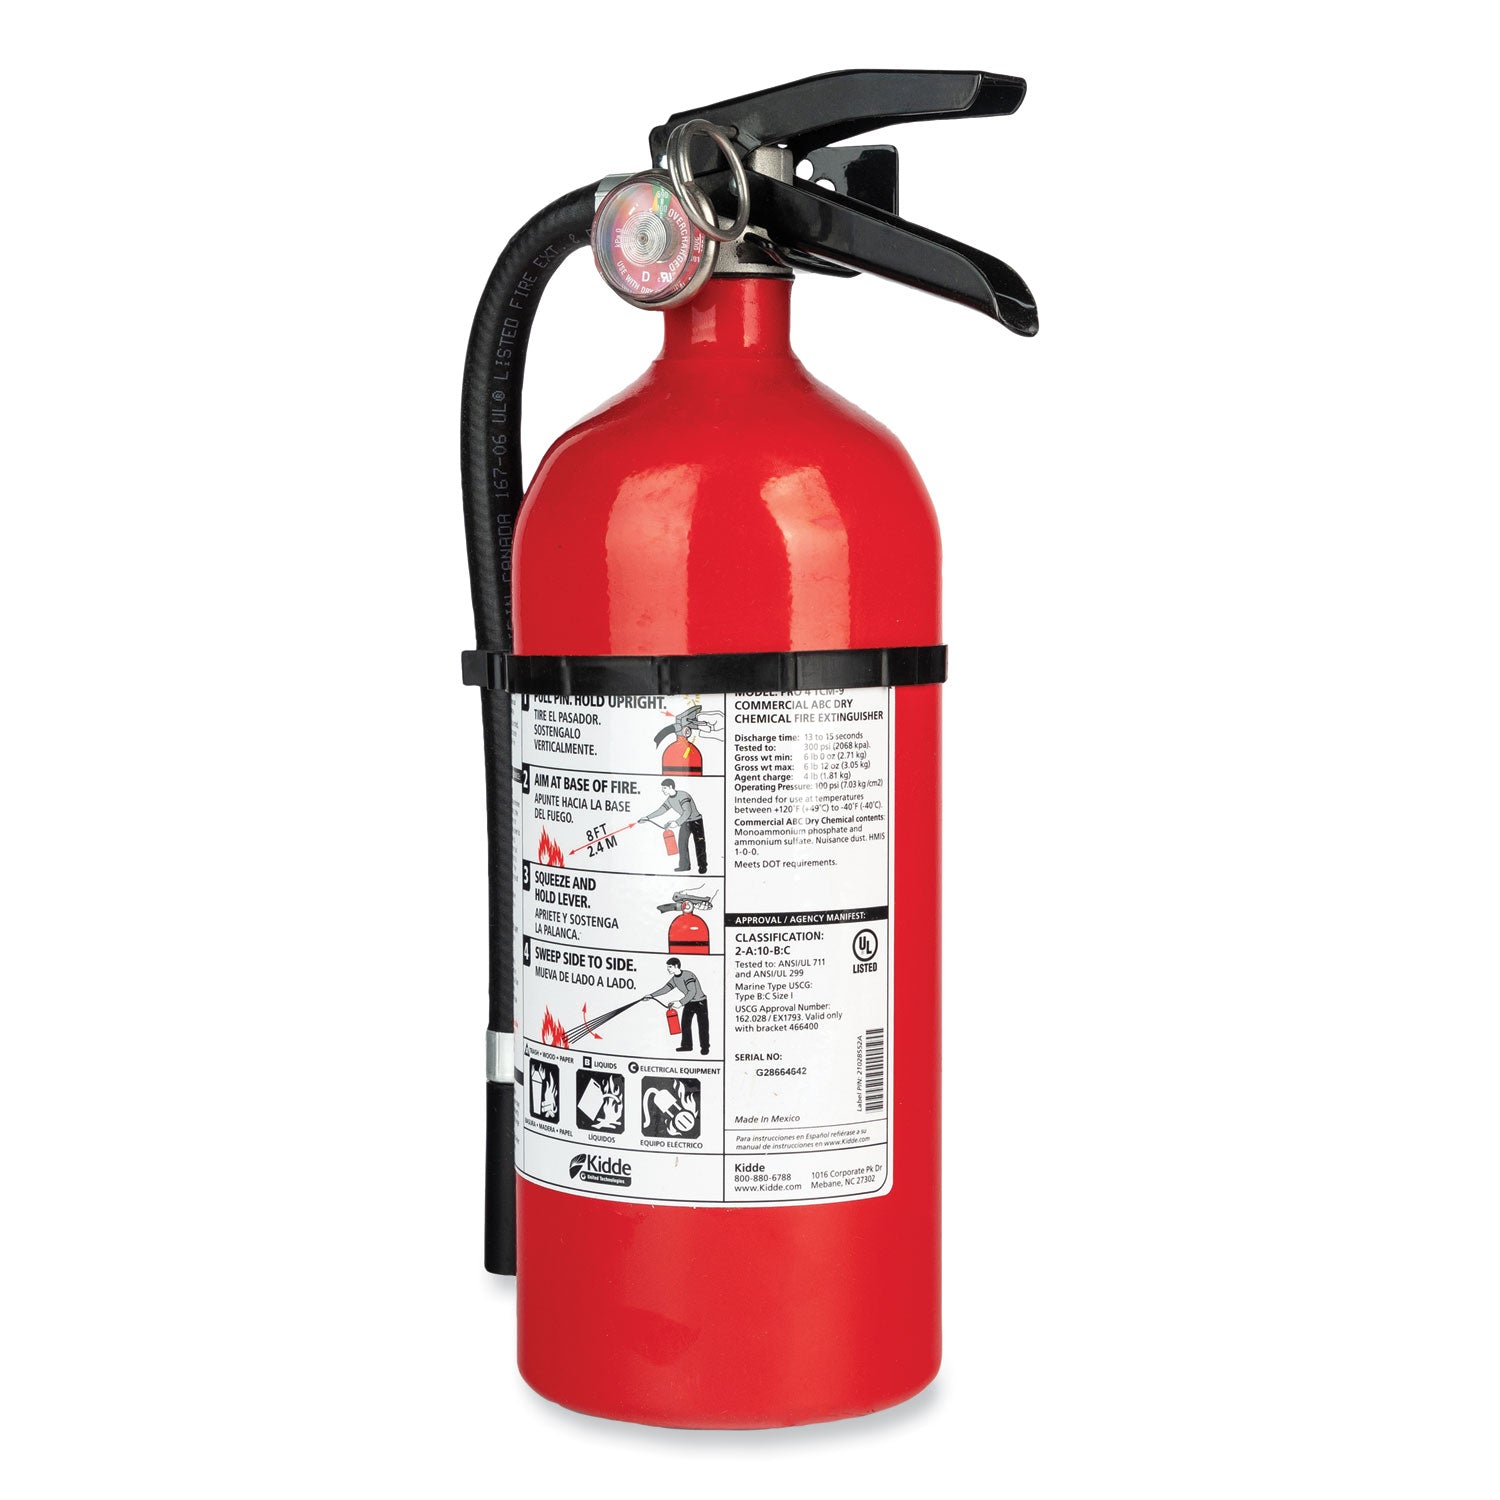 Pro 210 Fire Extinguisher, 2-A, 10-B:C, 4 lb - 